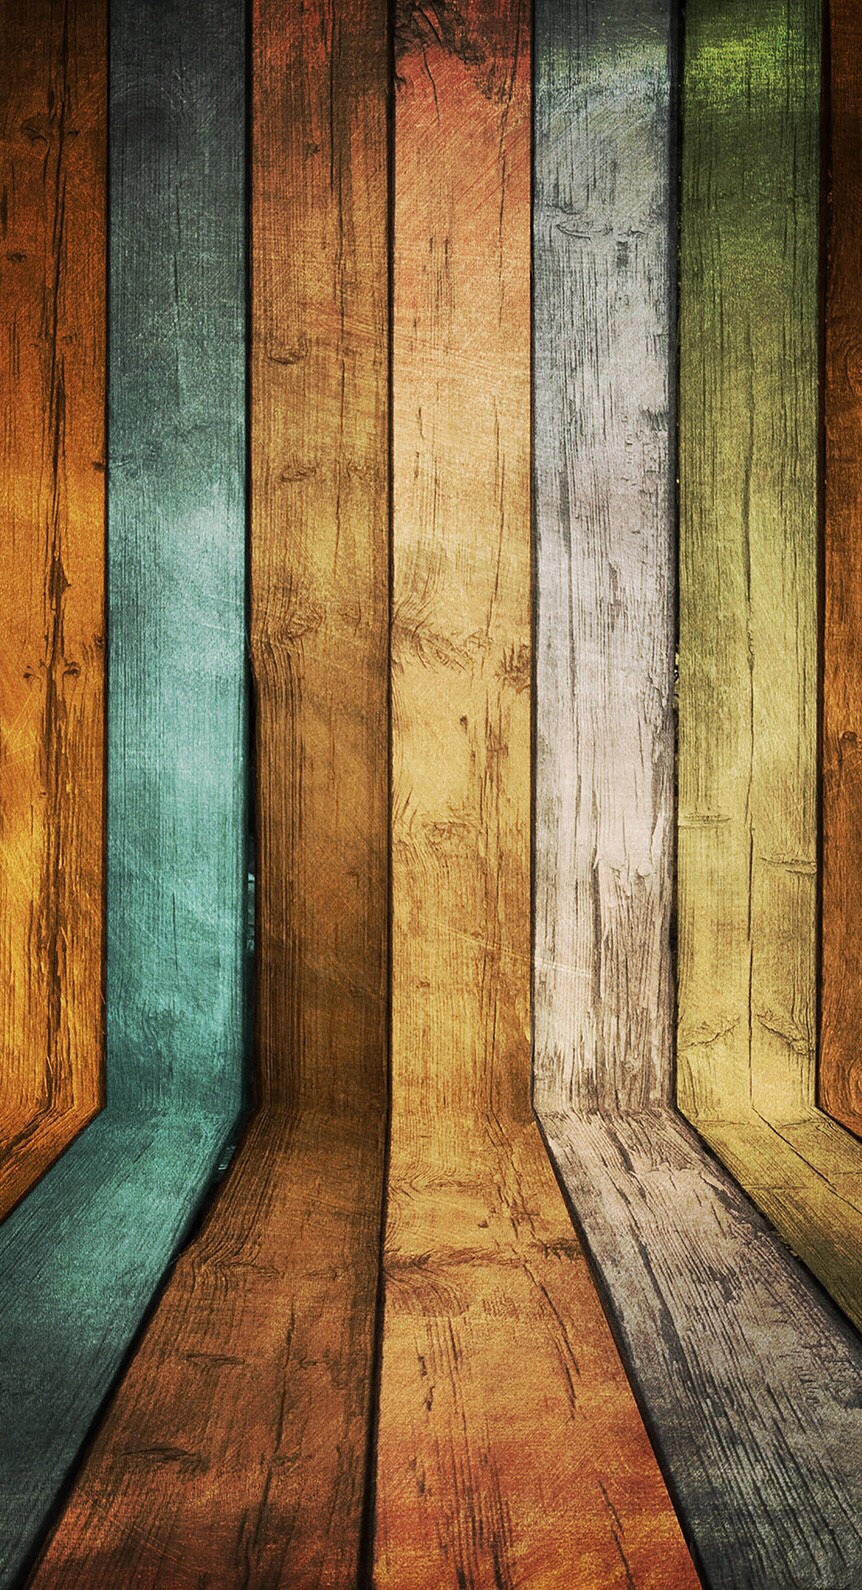 fondos de pantalla壁紙,木材,床,広葉樹,ウッドステイン,褐色